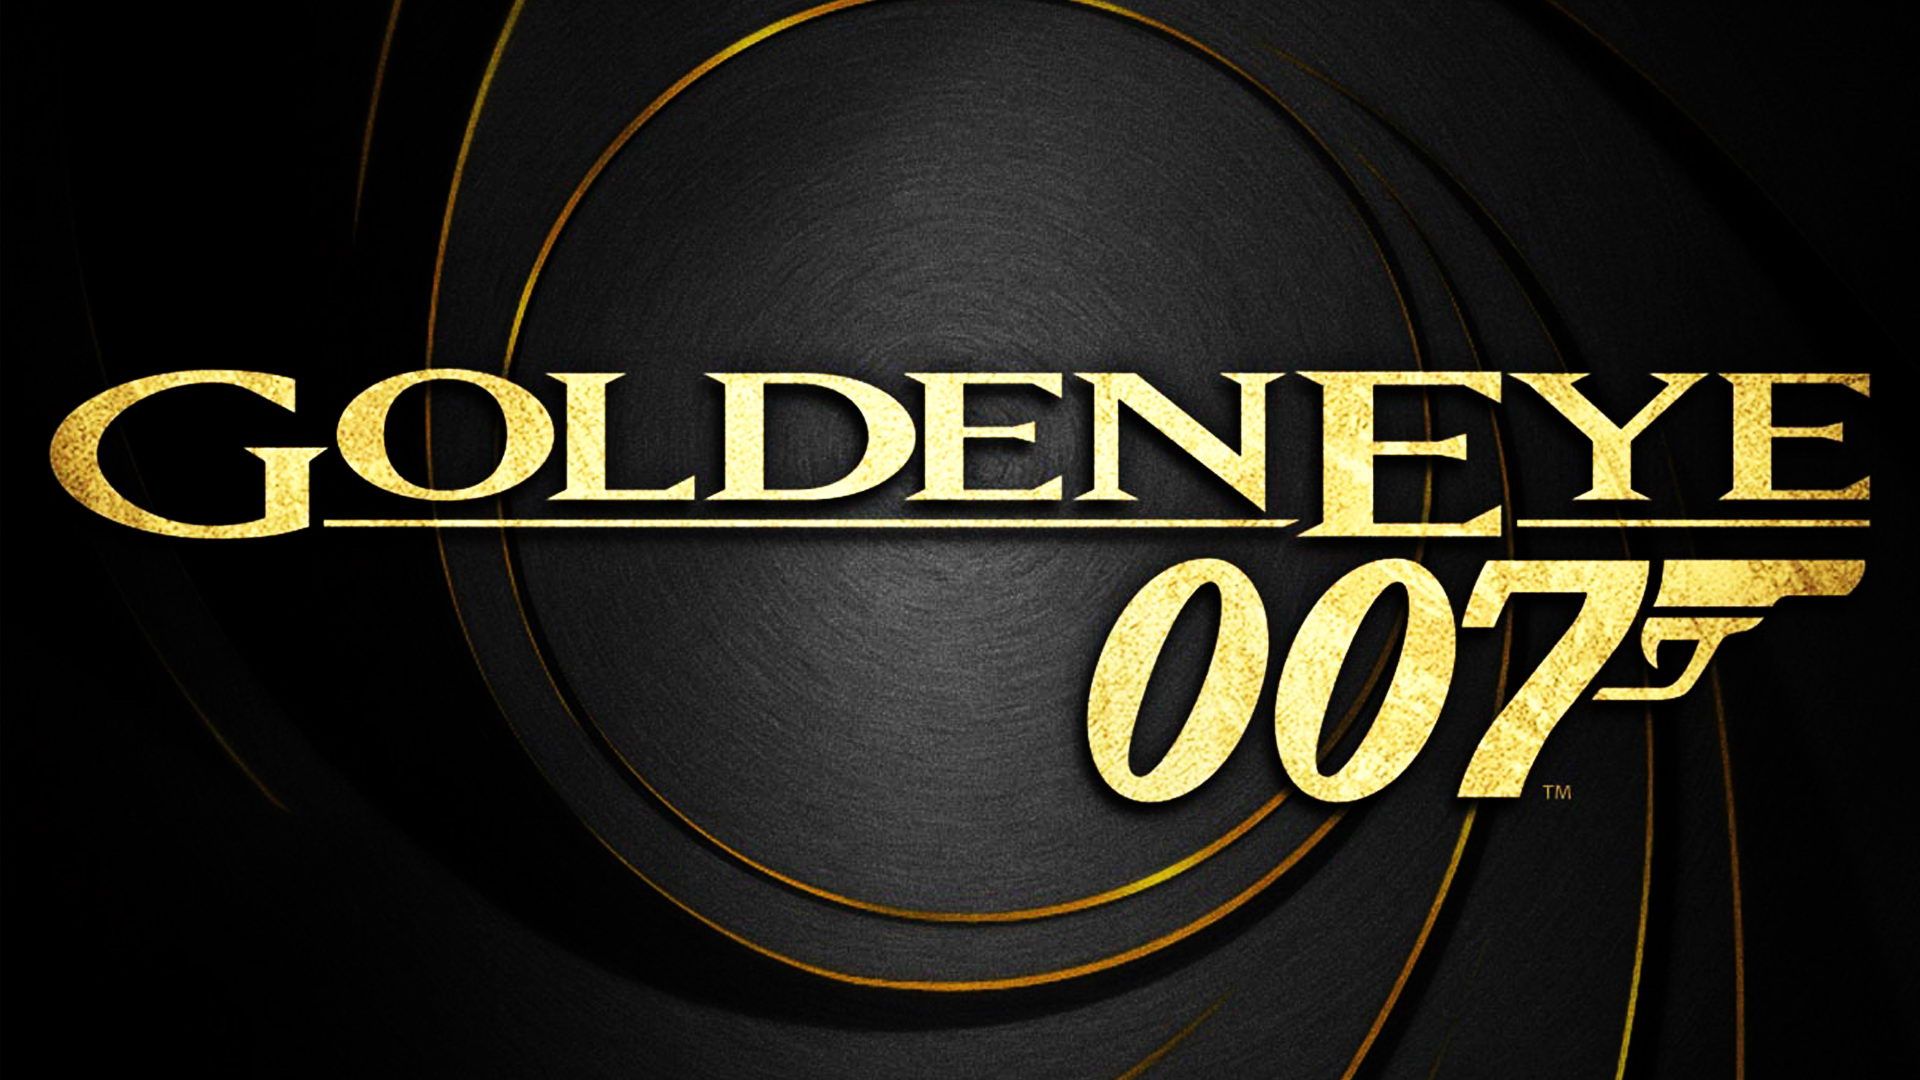 GoldenEye 007 Wallpapers Just Good Vibe